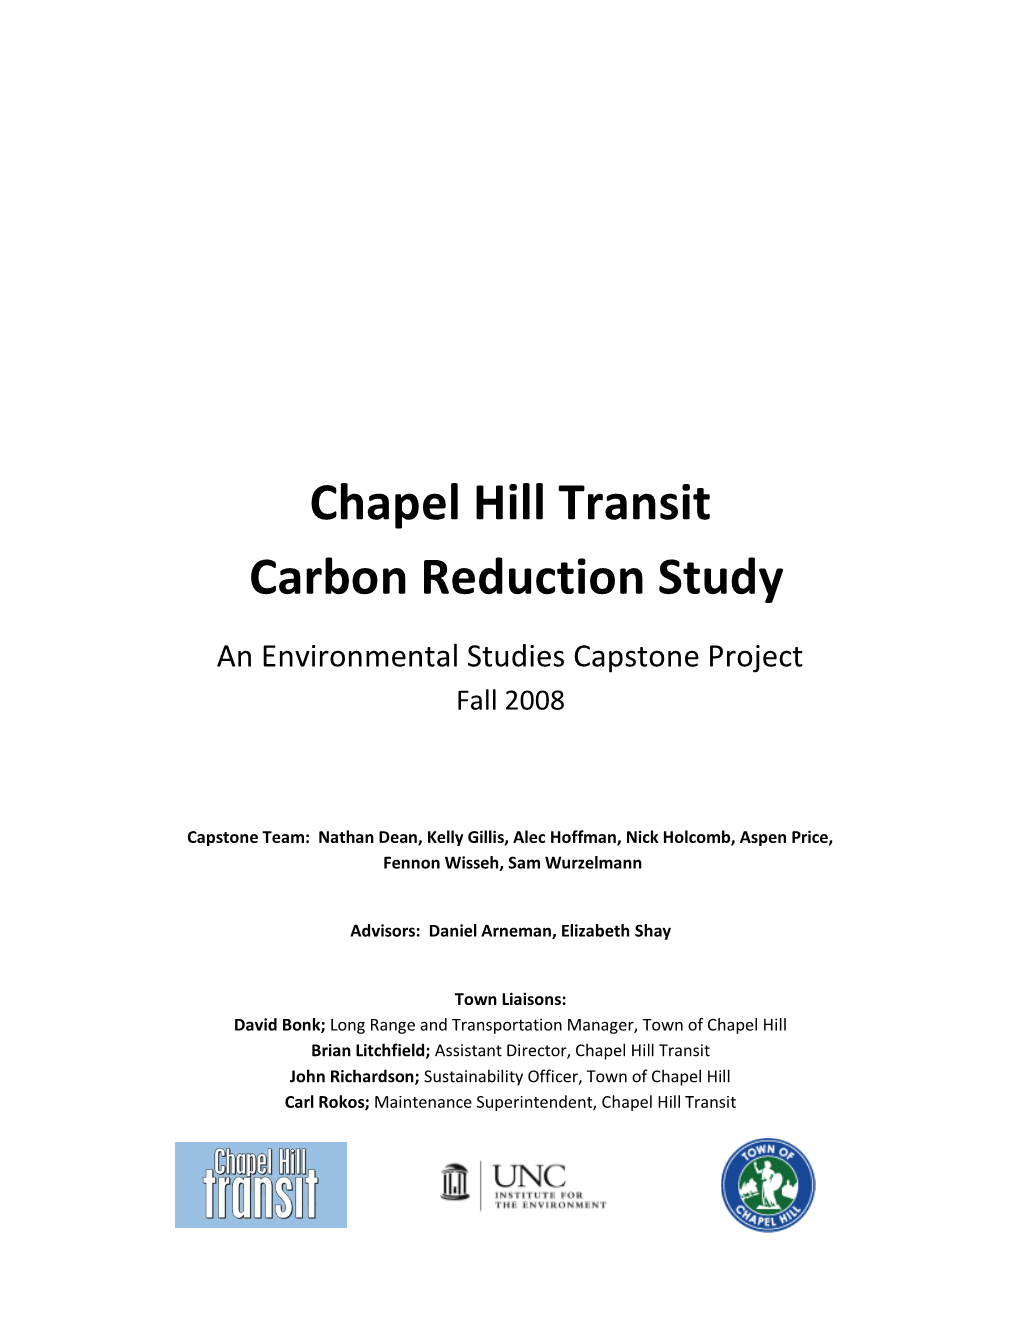 ENST 698 Chapel Hill Transit Carbon Reduction Study Fall 2008